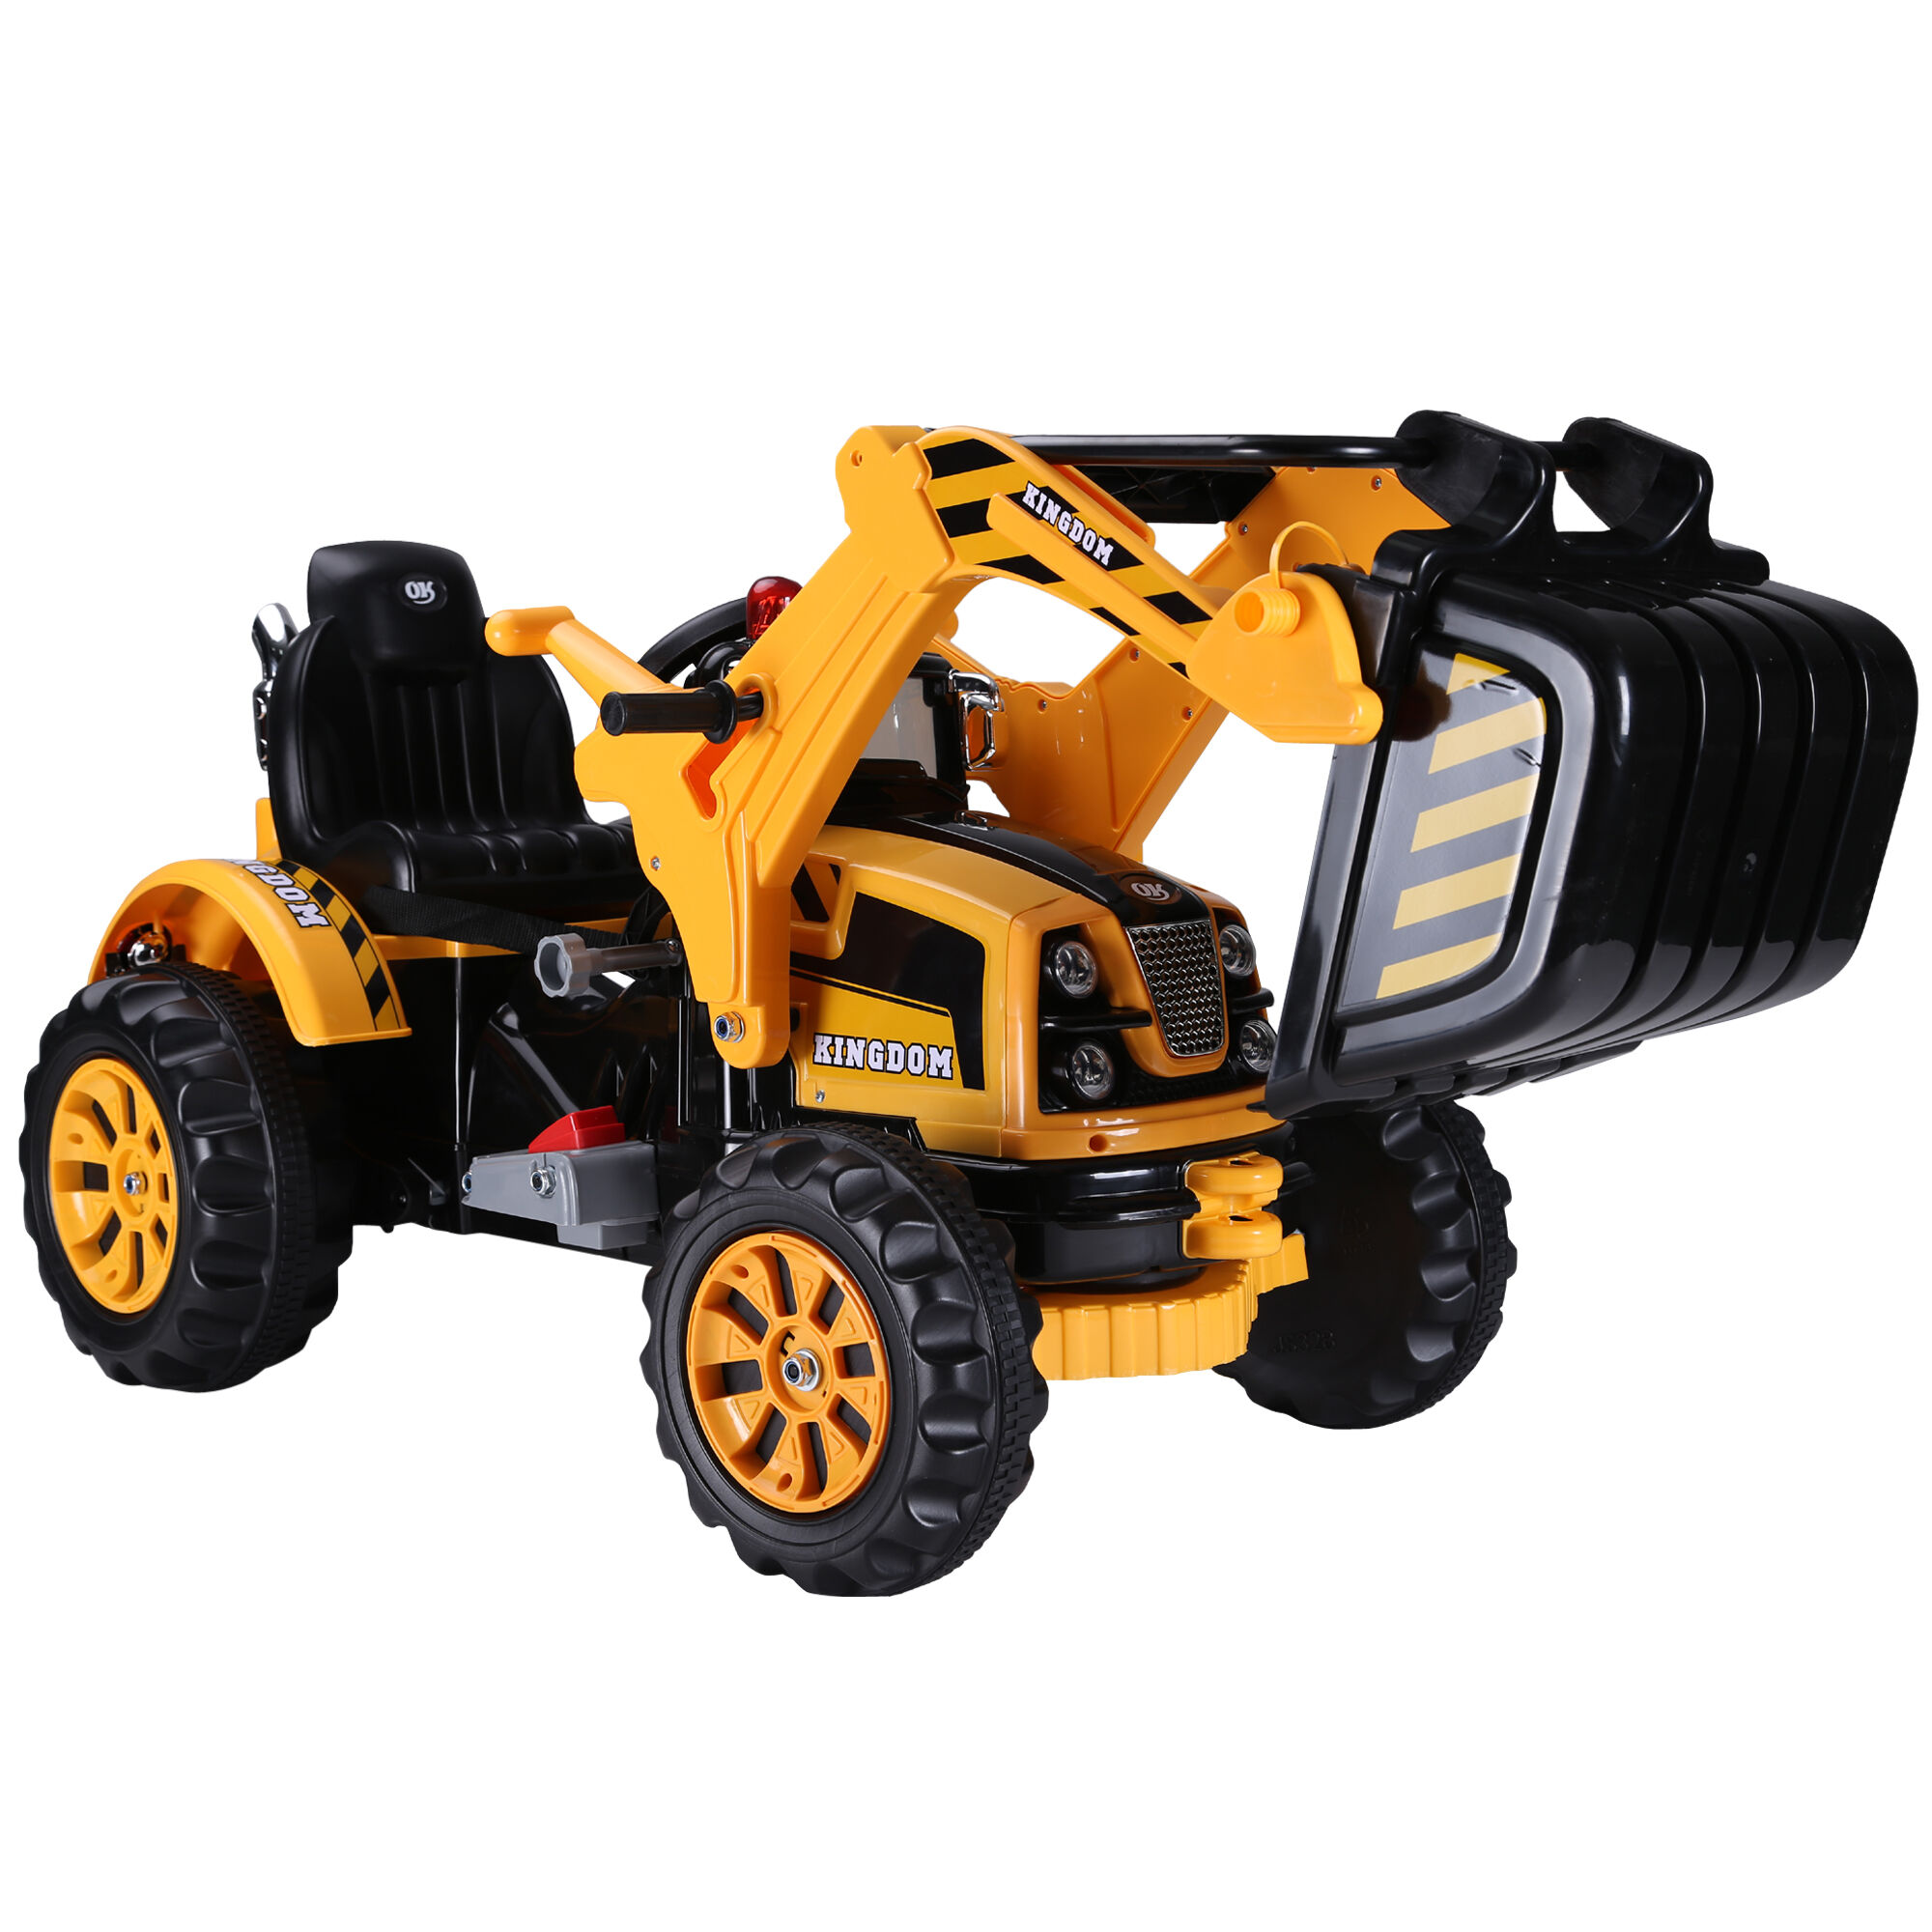 Aosom 6V Electric Kids Ride On Toy Tractor, Digger Construction Excavator Vehicle, Forward Backward, Yellow/Black   Aosom.com